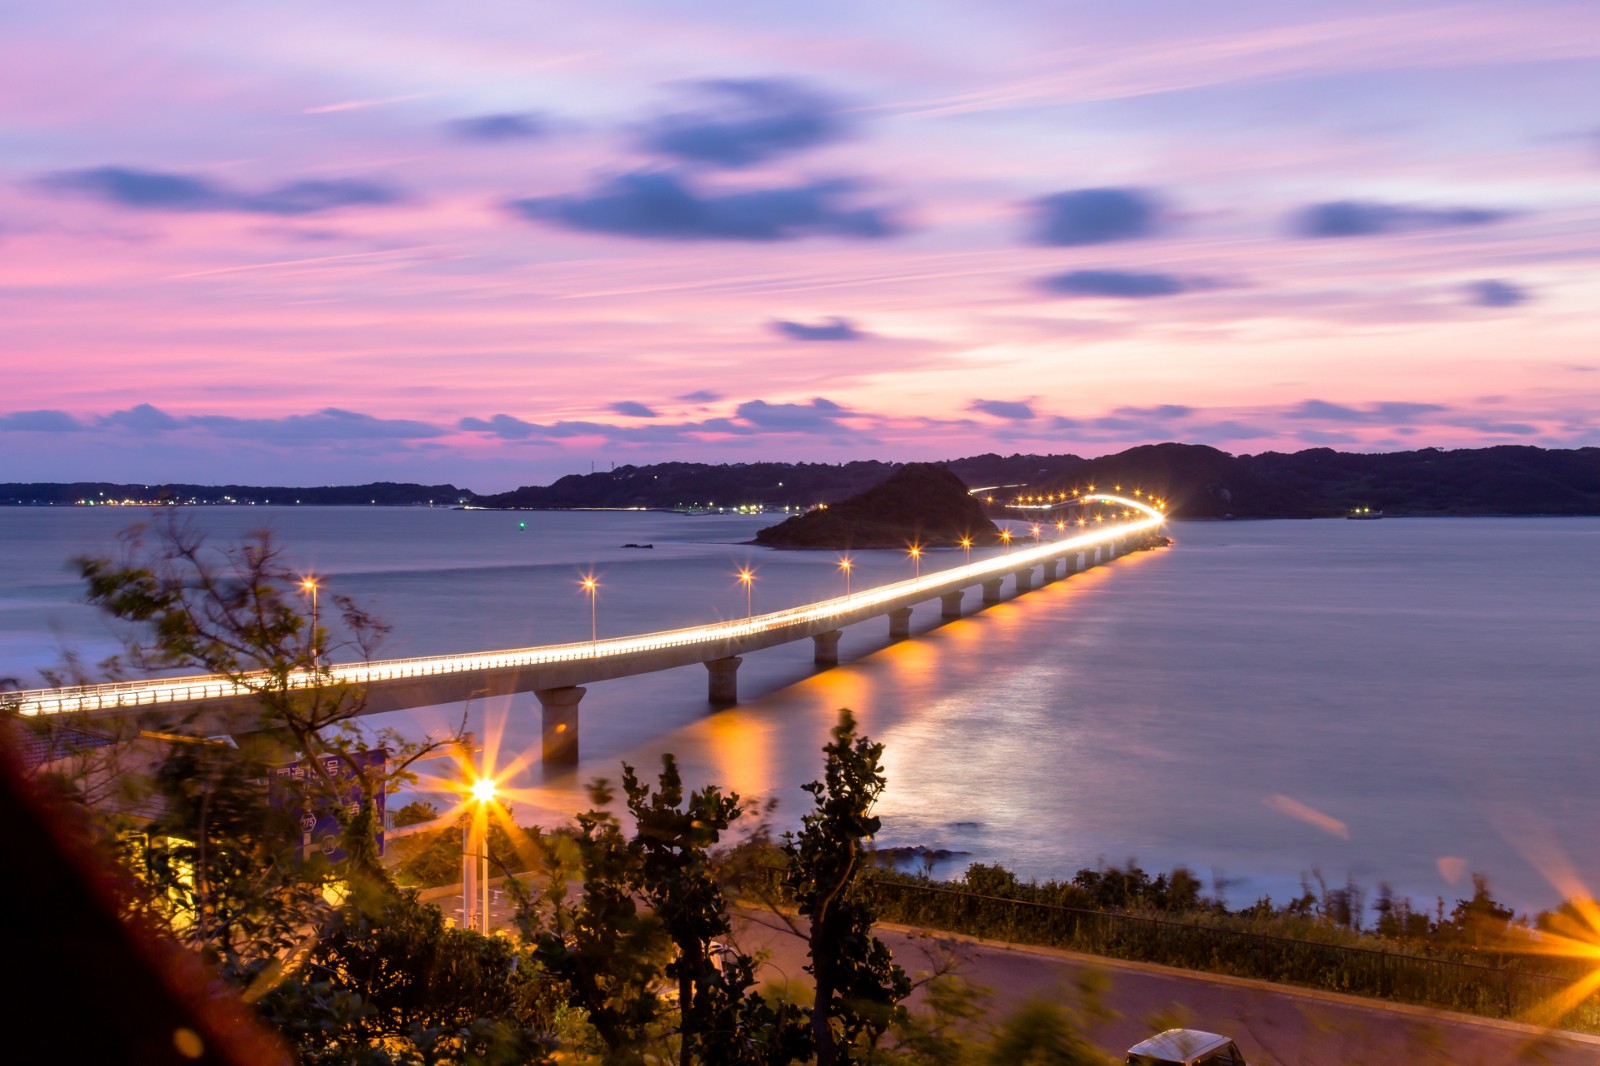 The twilight view at Tsunoshima Island and Tsunoshima Bridge